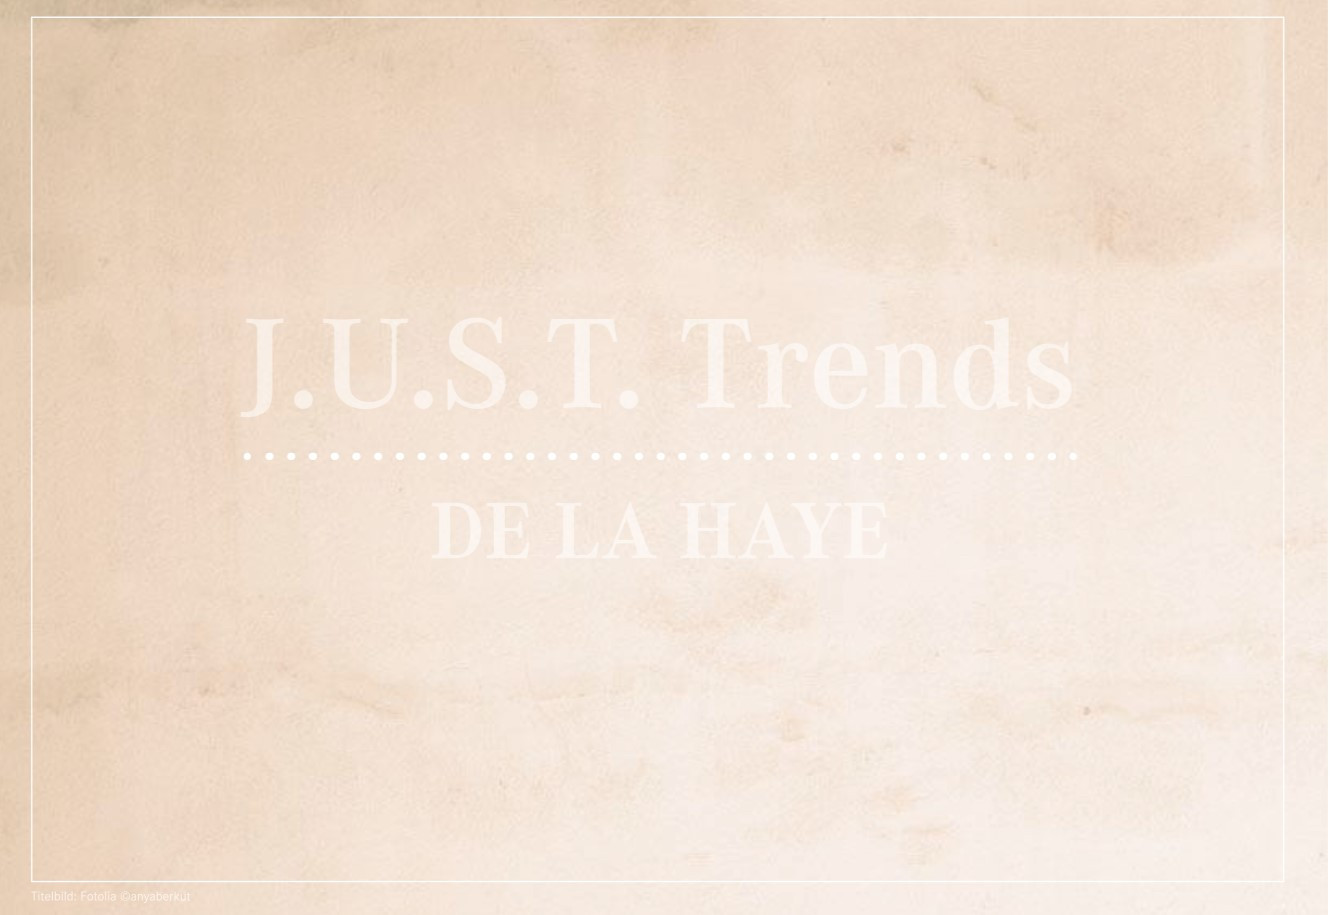 J.U.S.T. trends